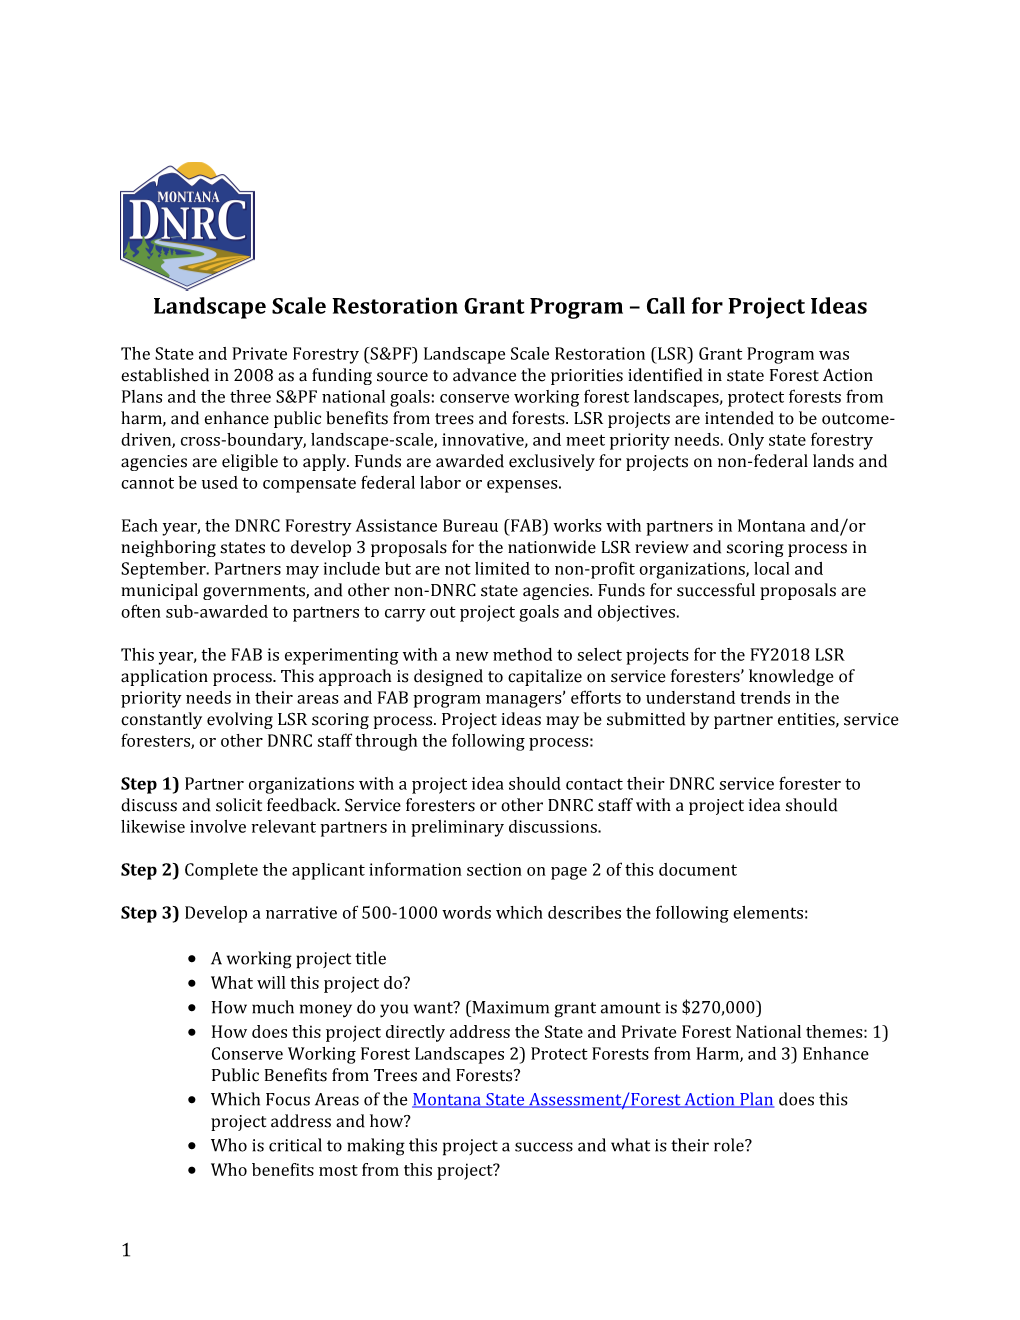 Landscape Scale Restoration Grant Program Call for Project Ideas